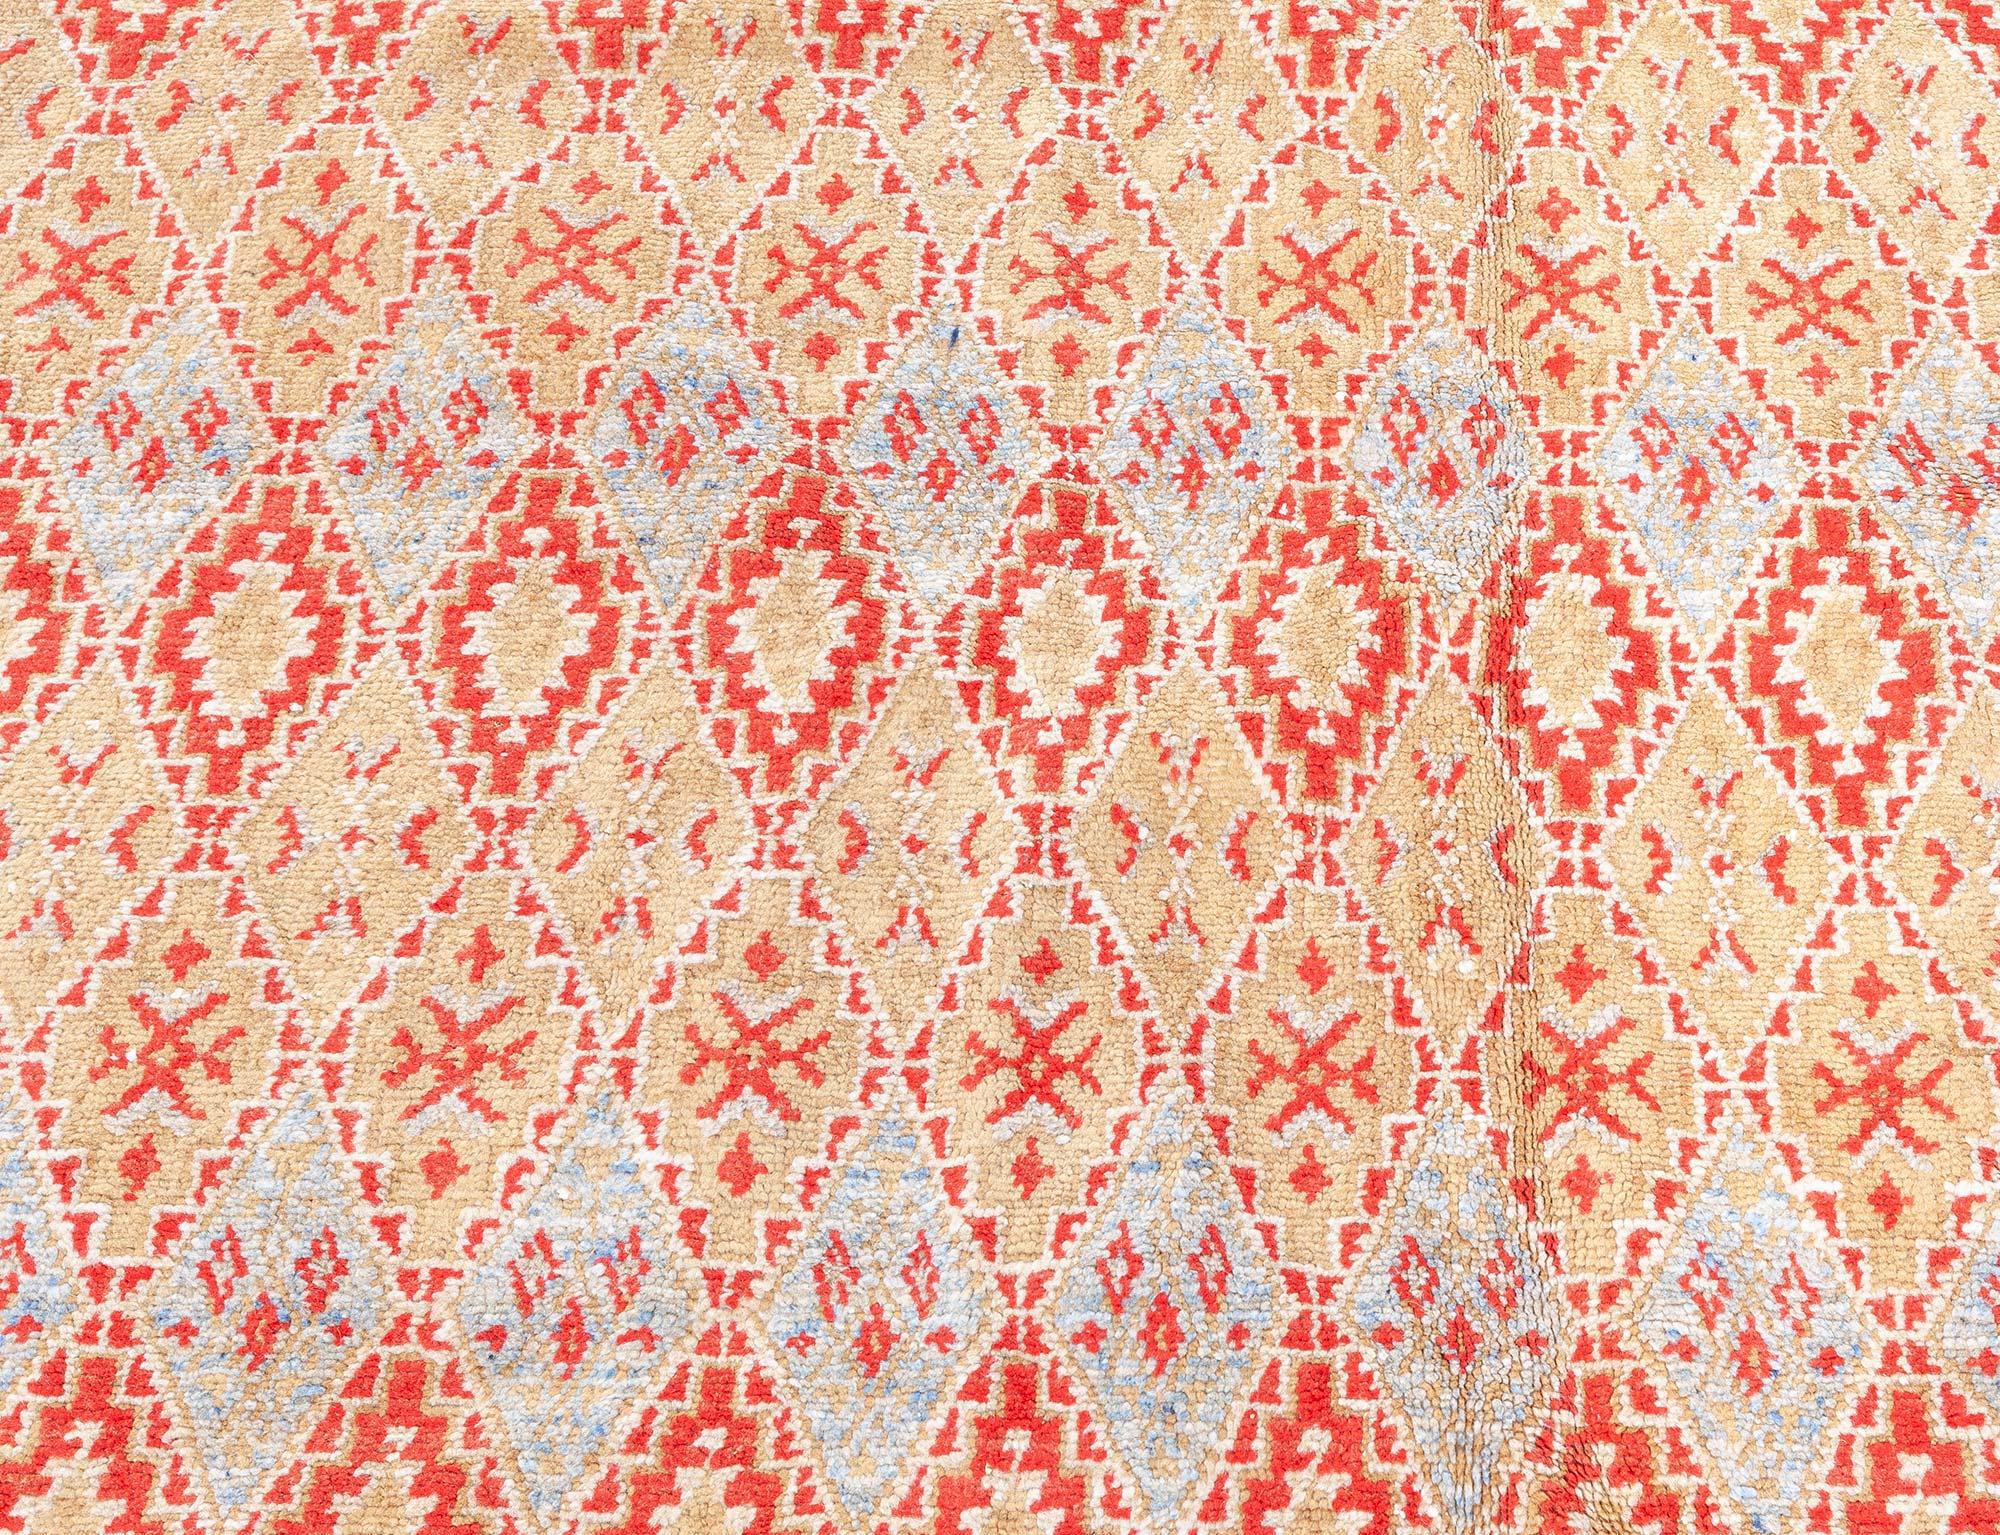 Mid-20th century tribal Moroccan handmade wool rug
Size: 6'10